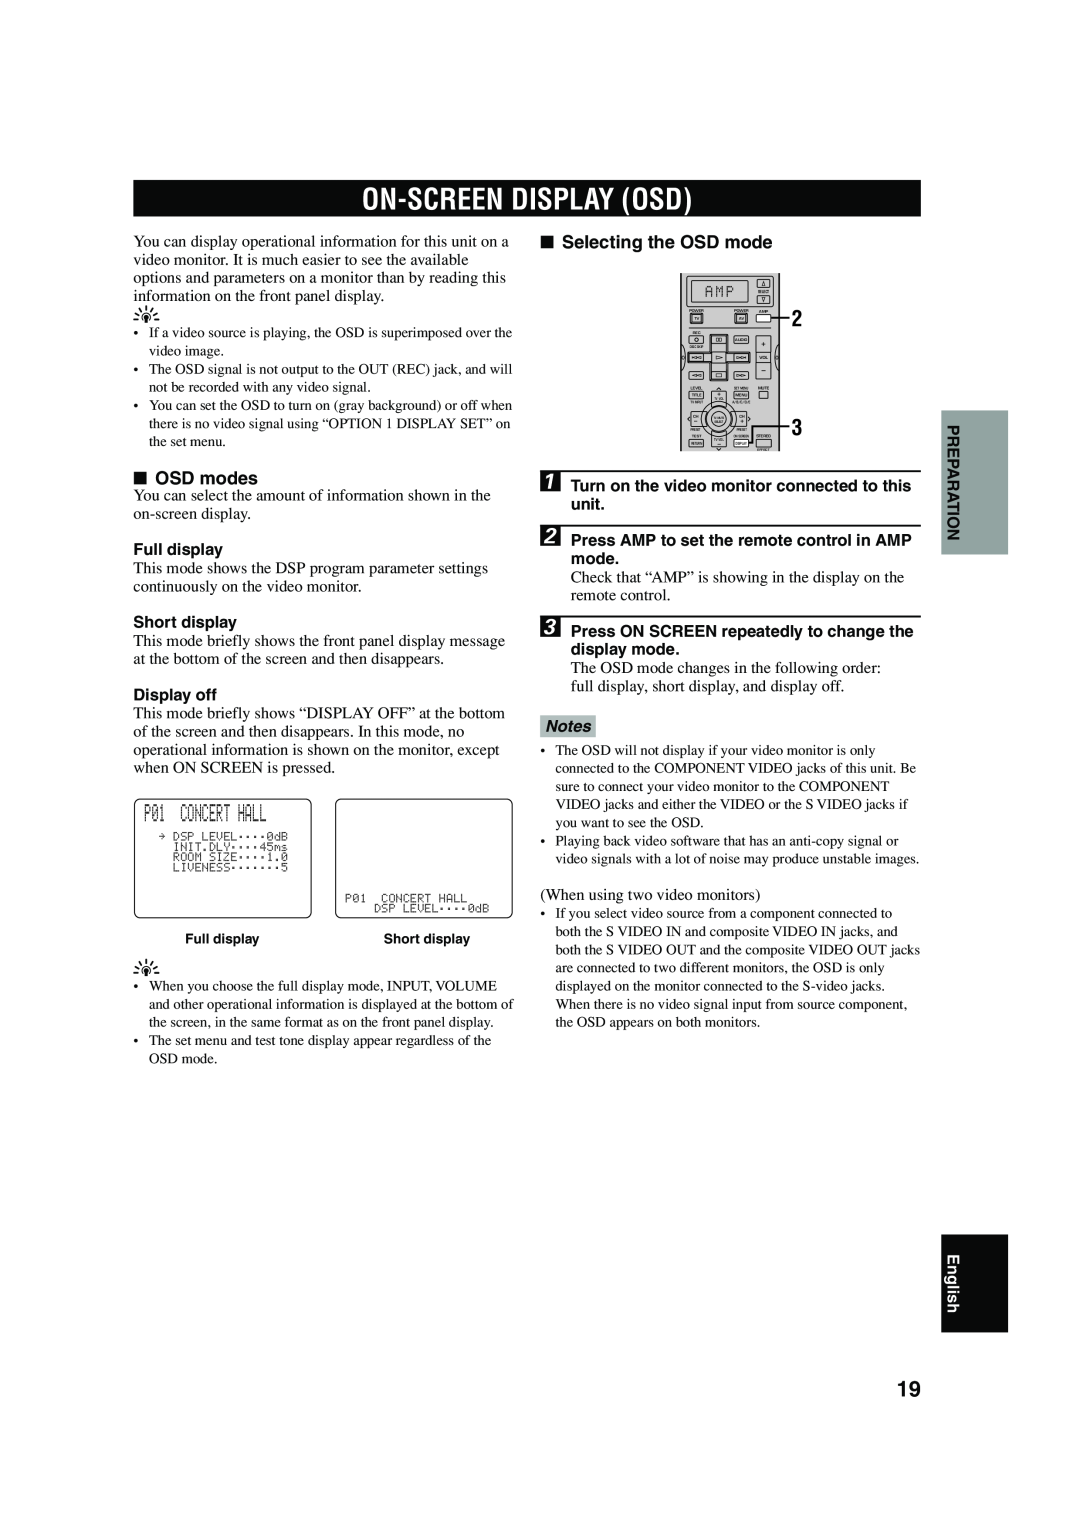 Yamaha RX-V740 owner manual On-Screendisplay Osd, P01 CONCERT HALL, OSD modes, Selecting the OSD mode, English 